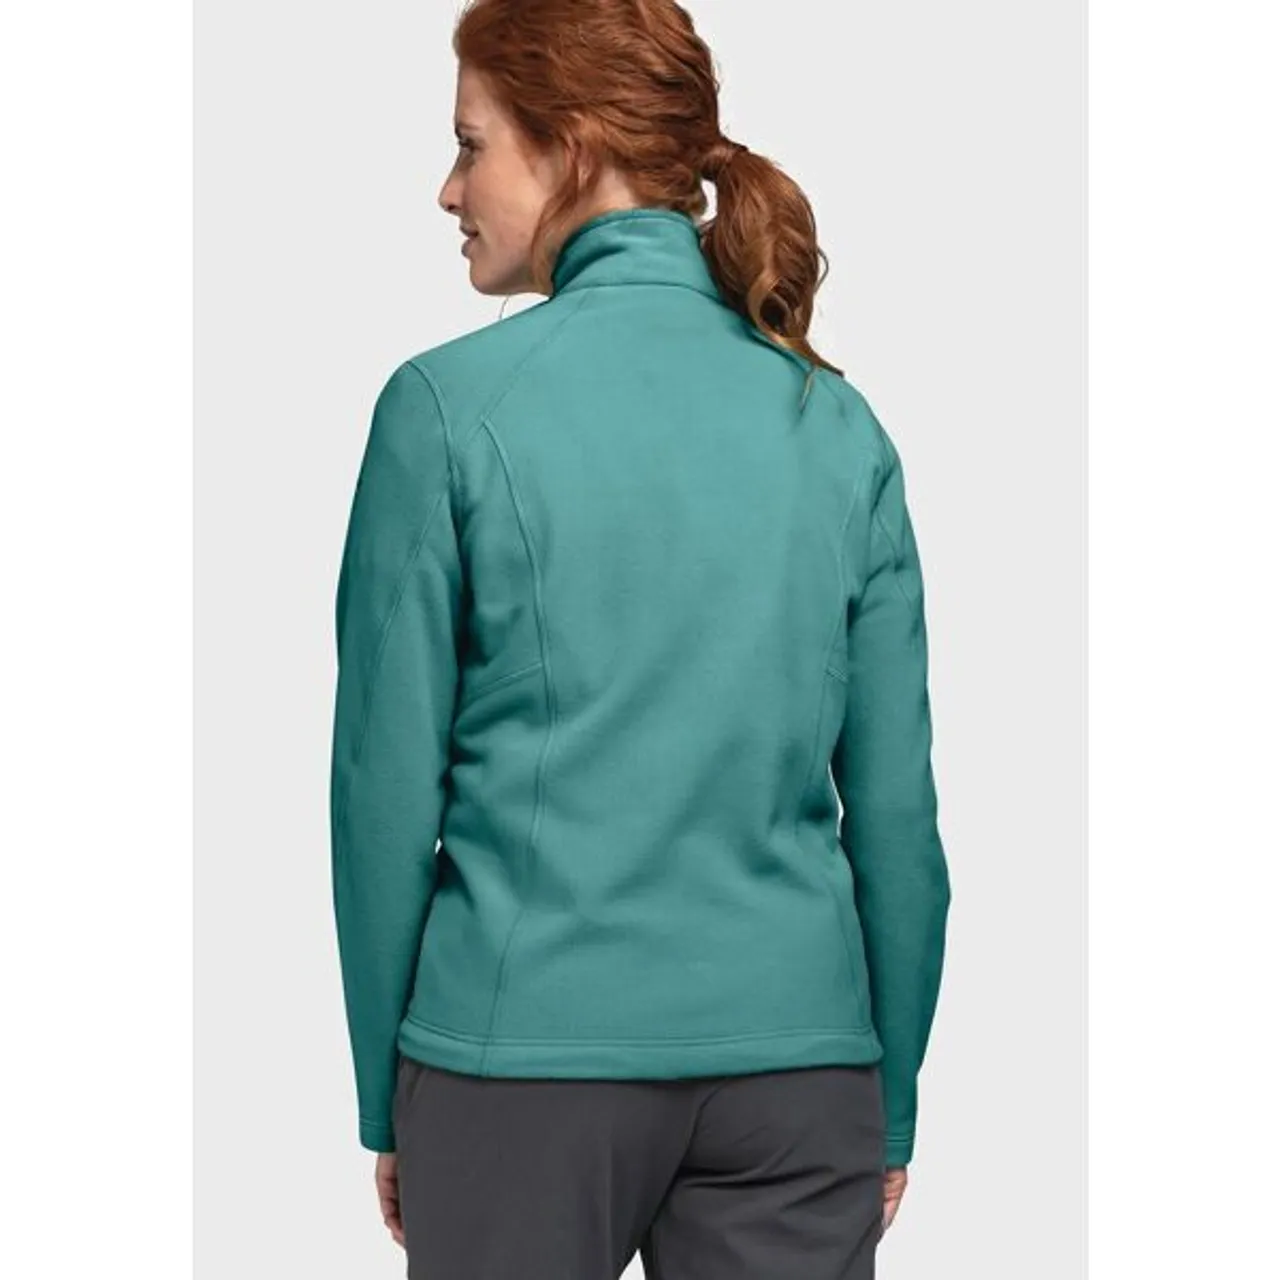 Fleecejacke SCHÖFFEL "Fleece Jacket Leona3" Gr. 44, grün (6755, grün) Damen Jacken Sportjacken